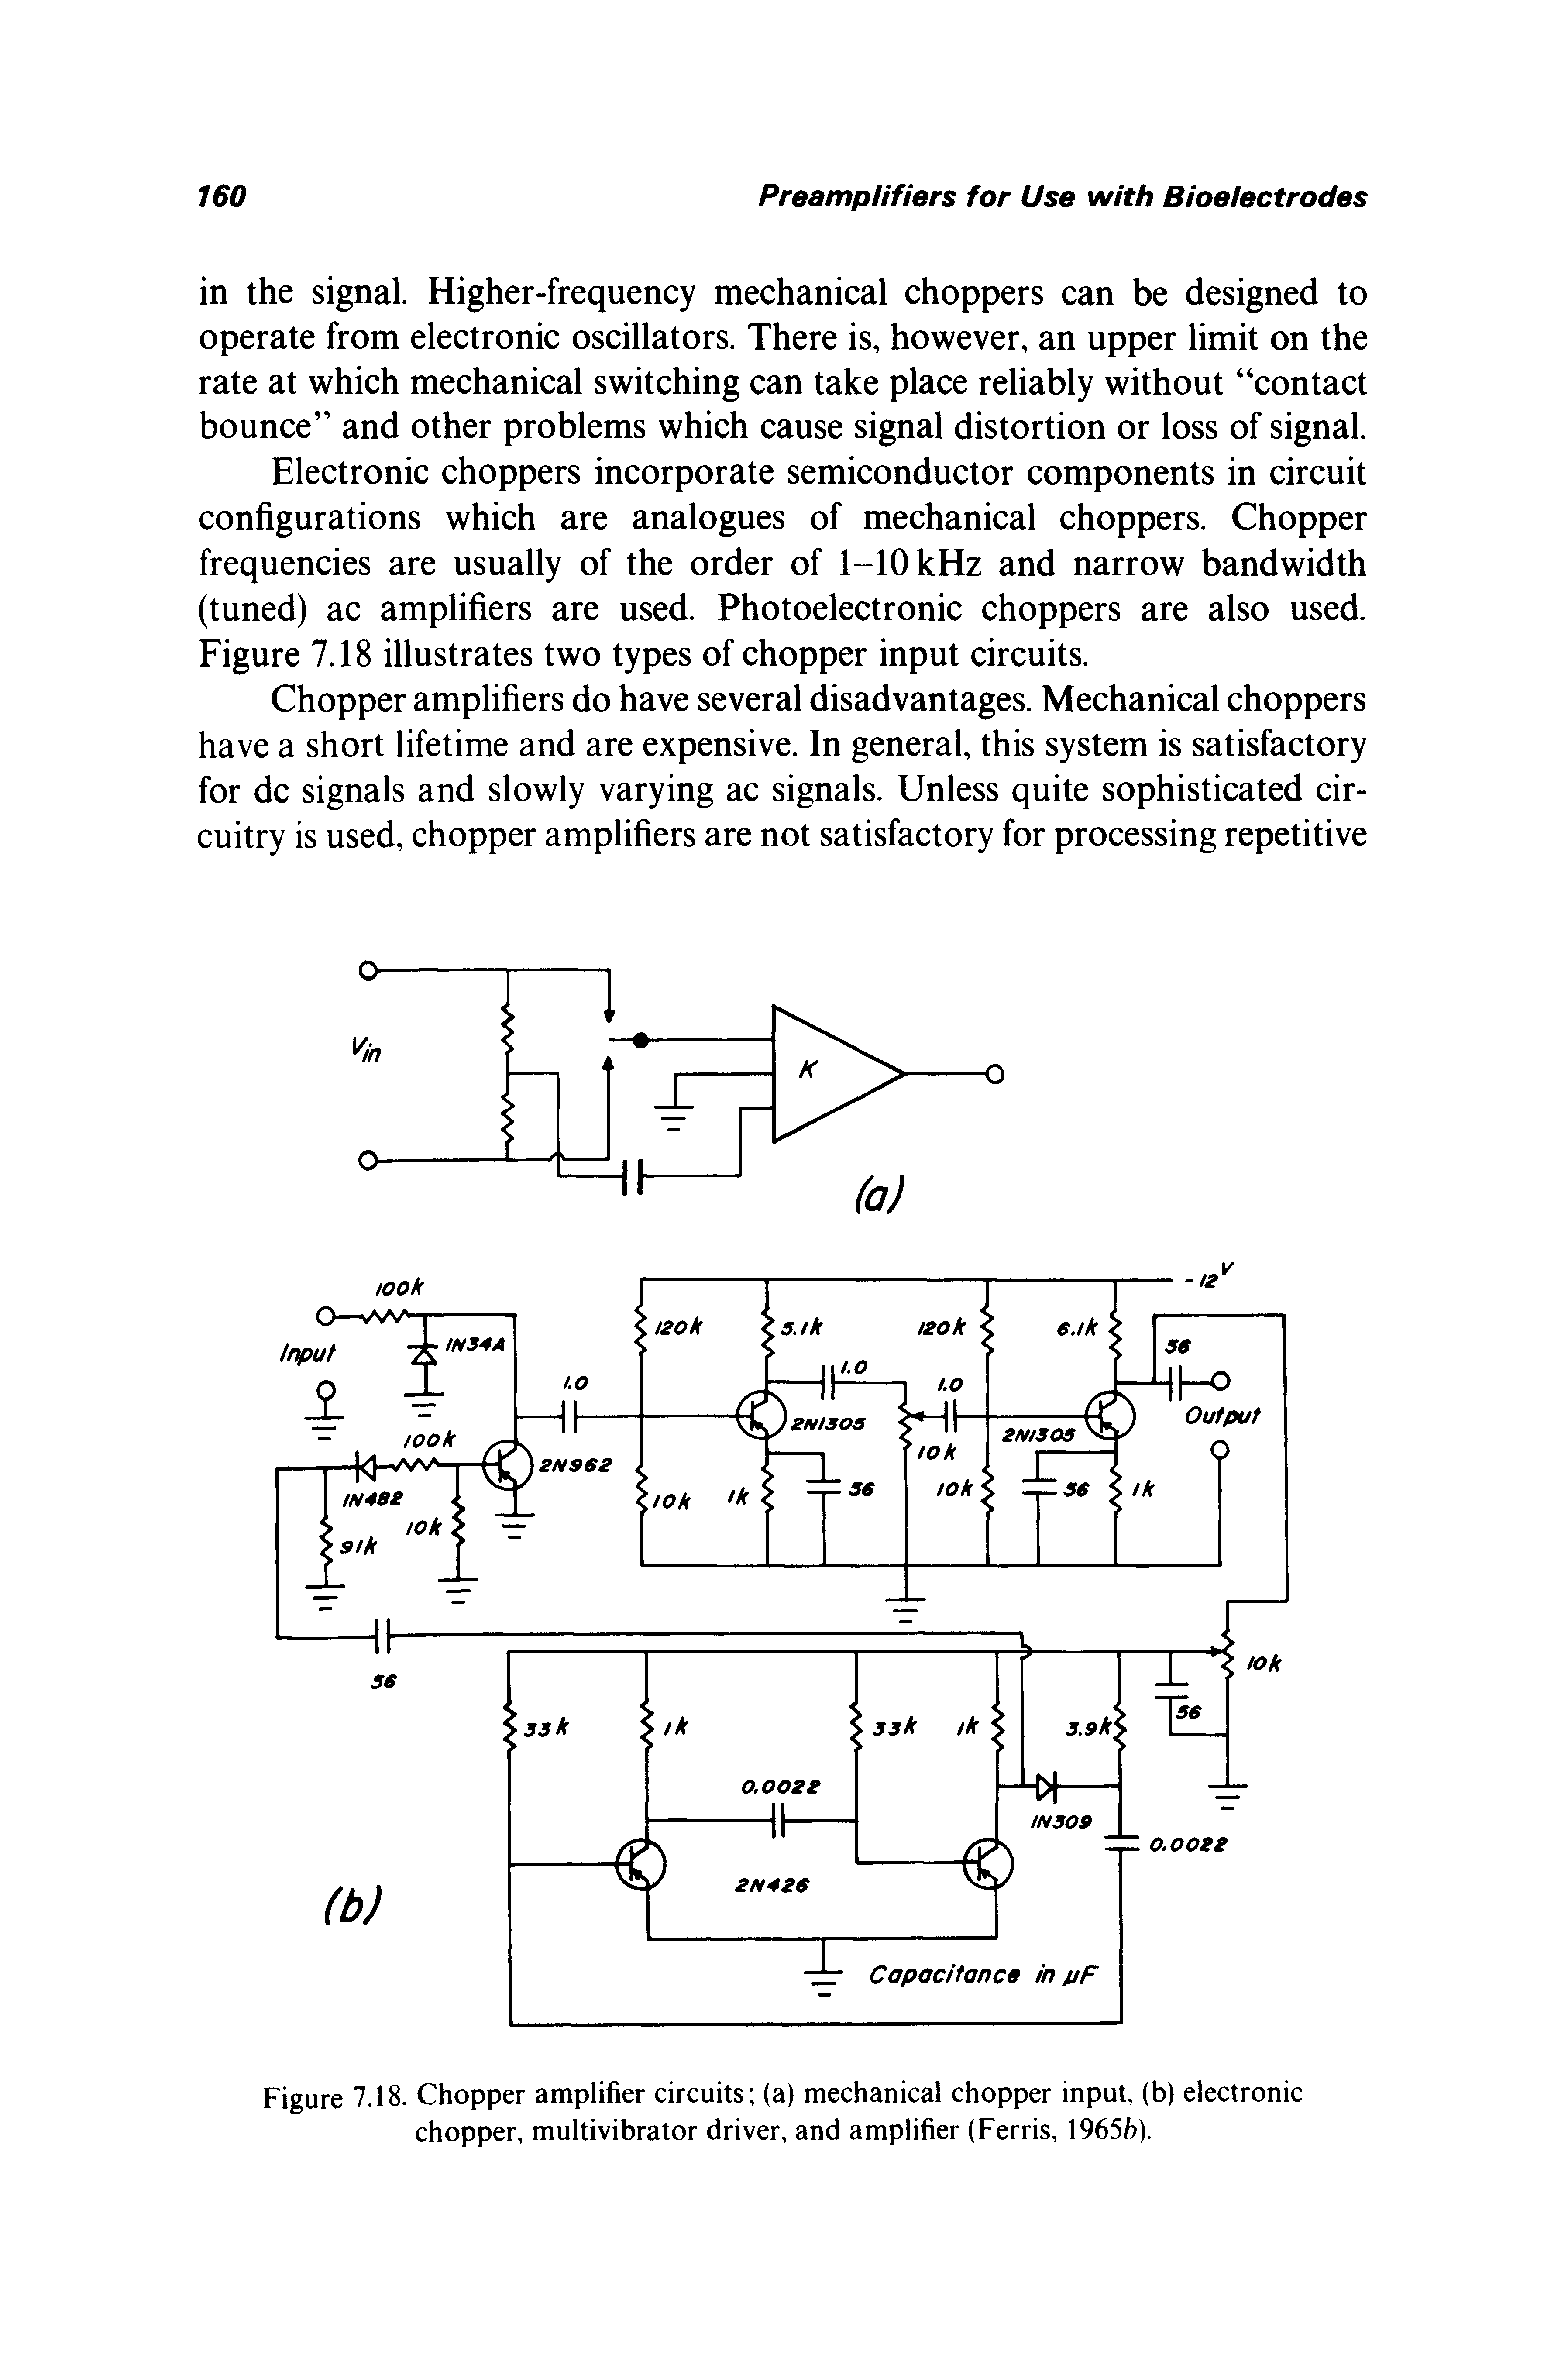 Figure 7.18. Chopper amplifier circuits (a) mechanical chopper input, (b) electronic chopper, multivibrator driver, and amplifier (Ferris, 1965fi).